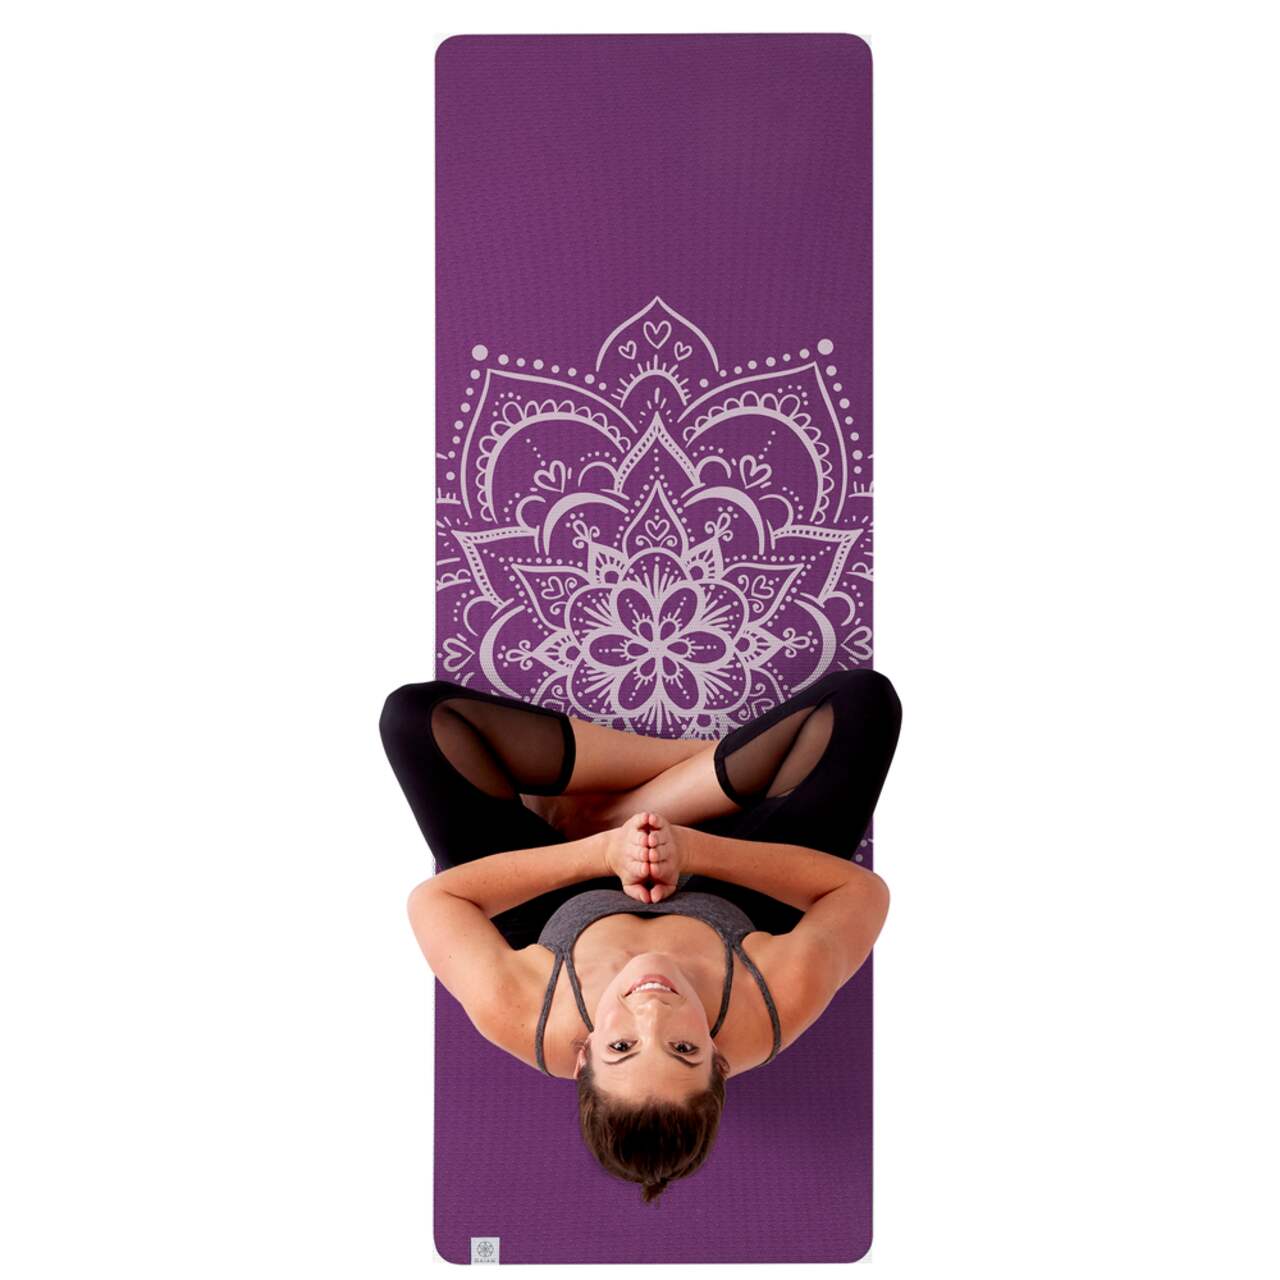 Gaiam Print Yoga Mat Pink Marrakesh 3 4mm for sale online